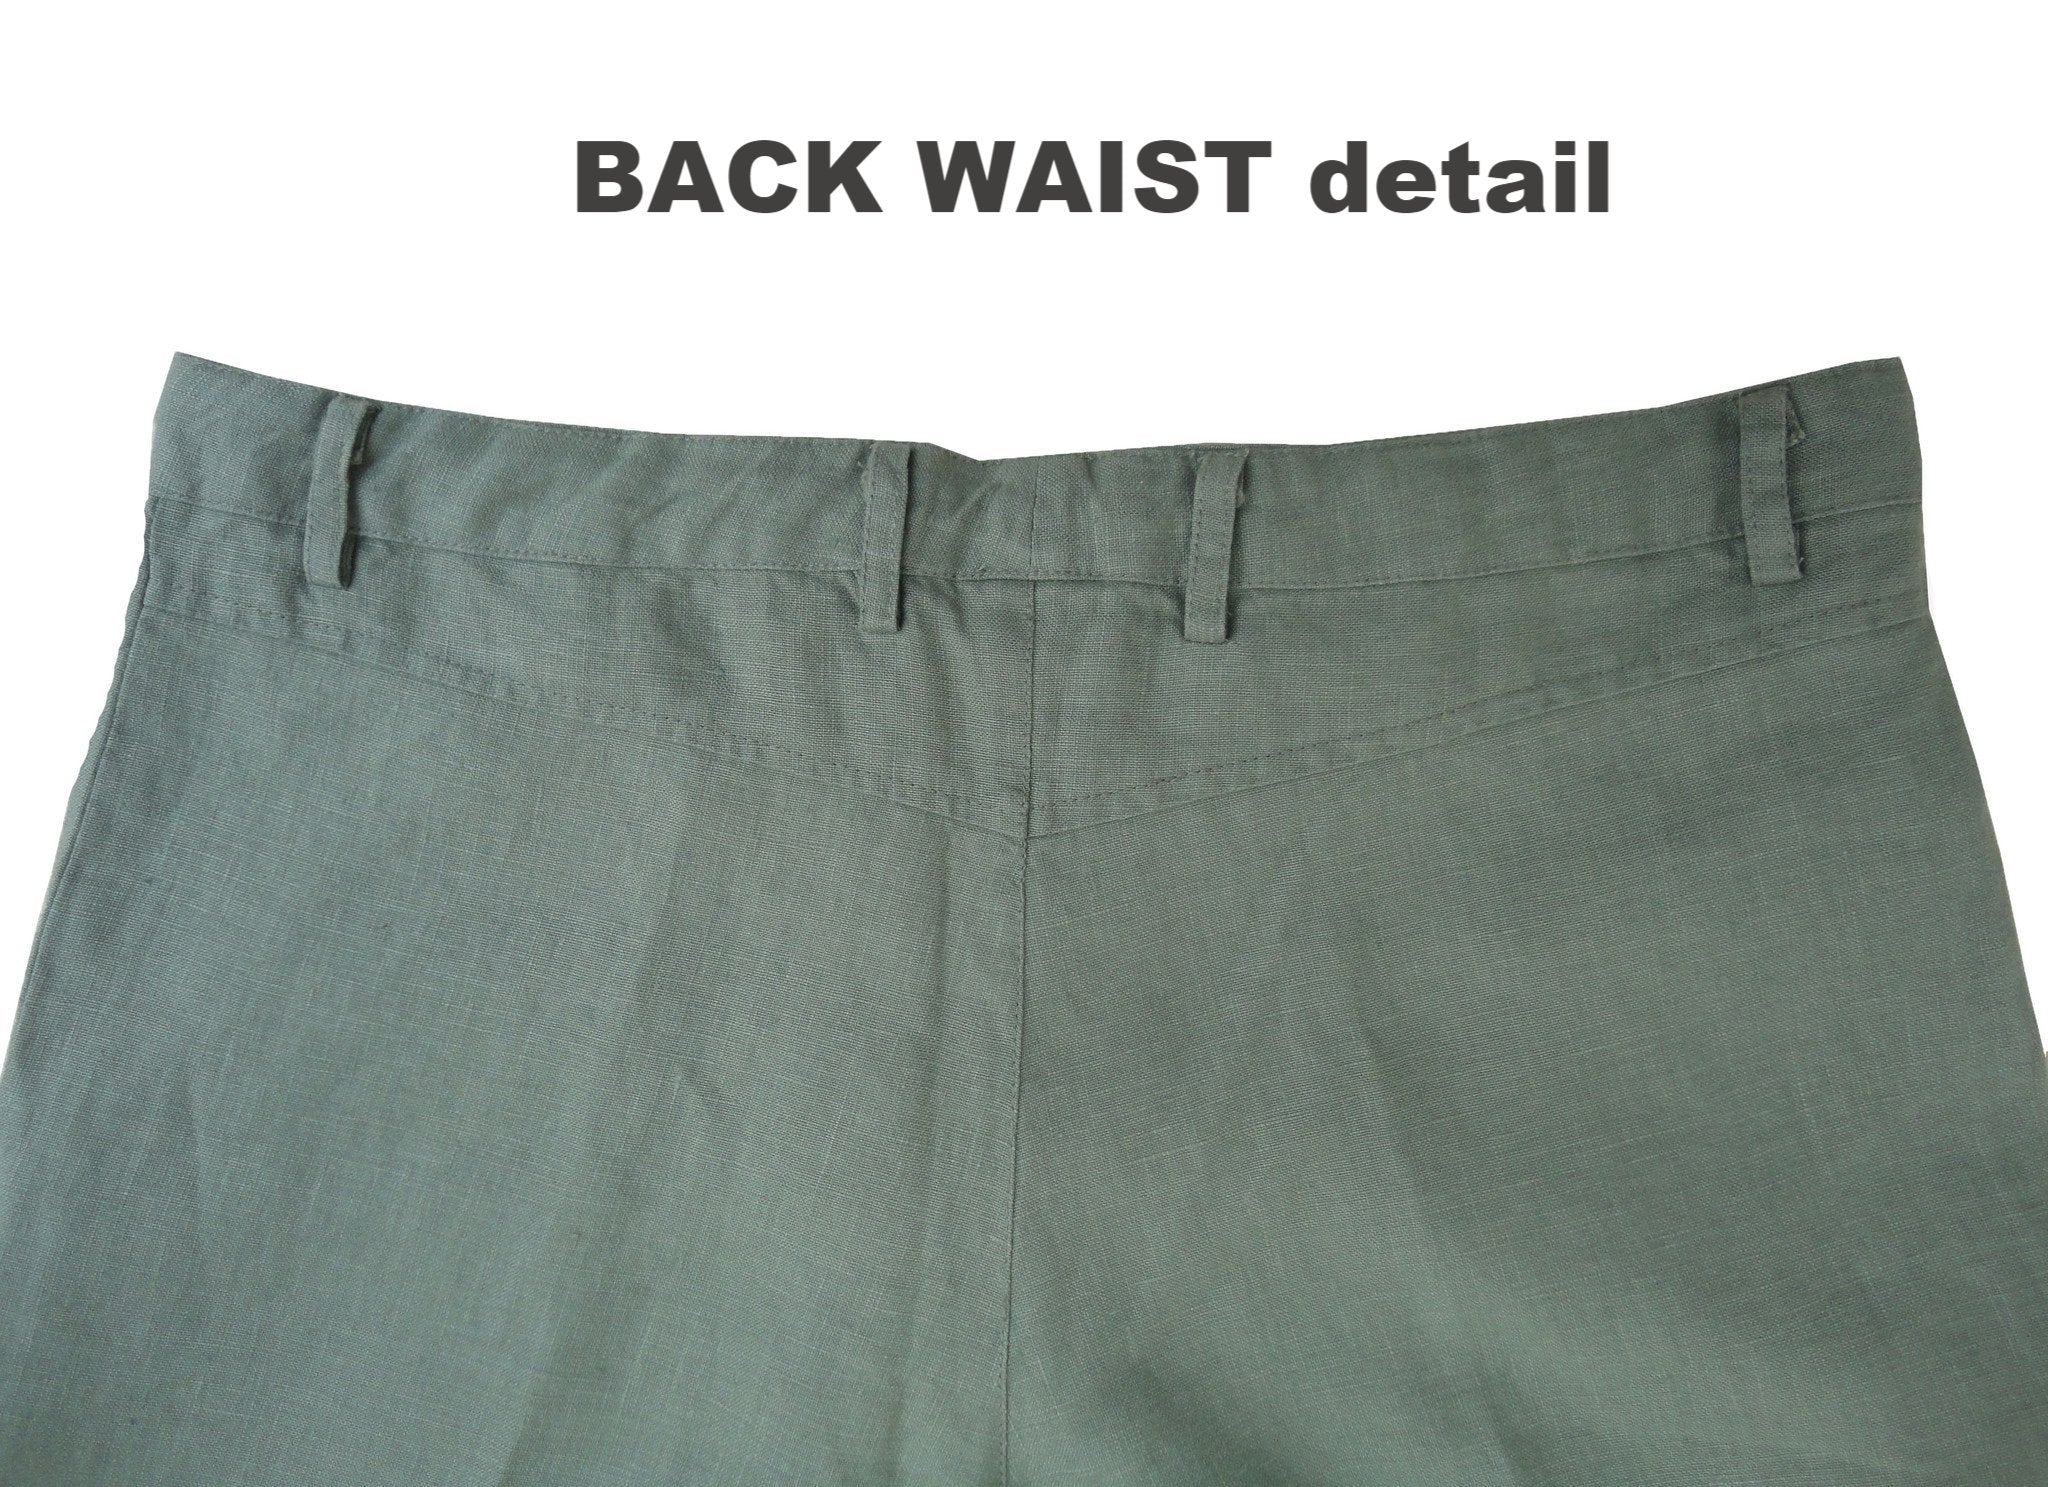 casual men pants detail back